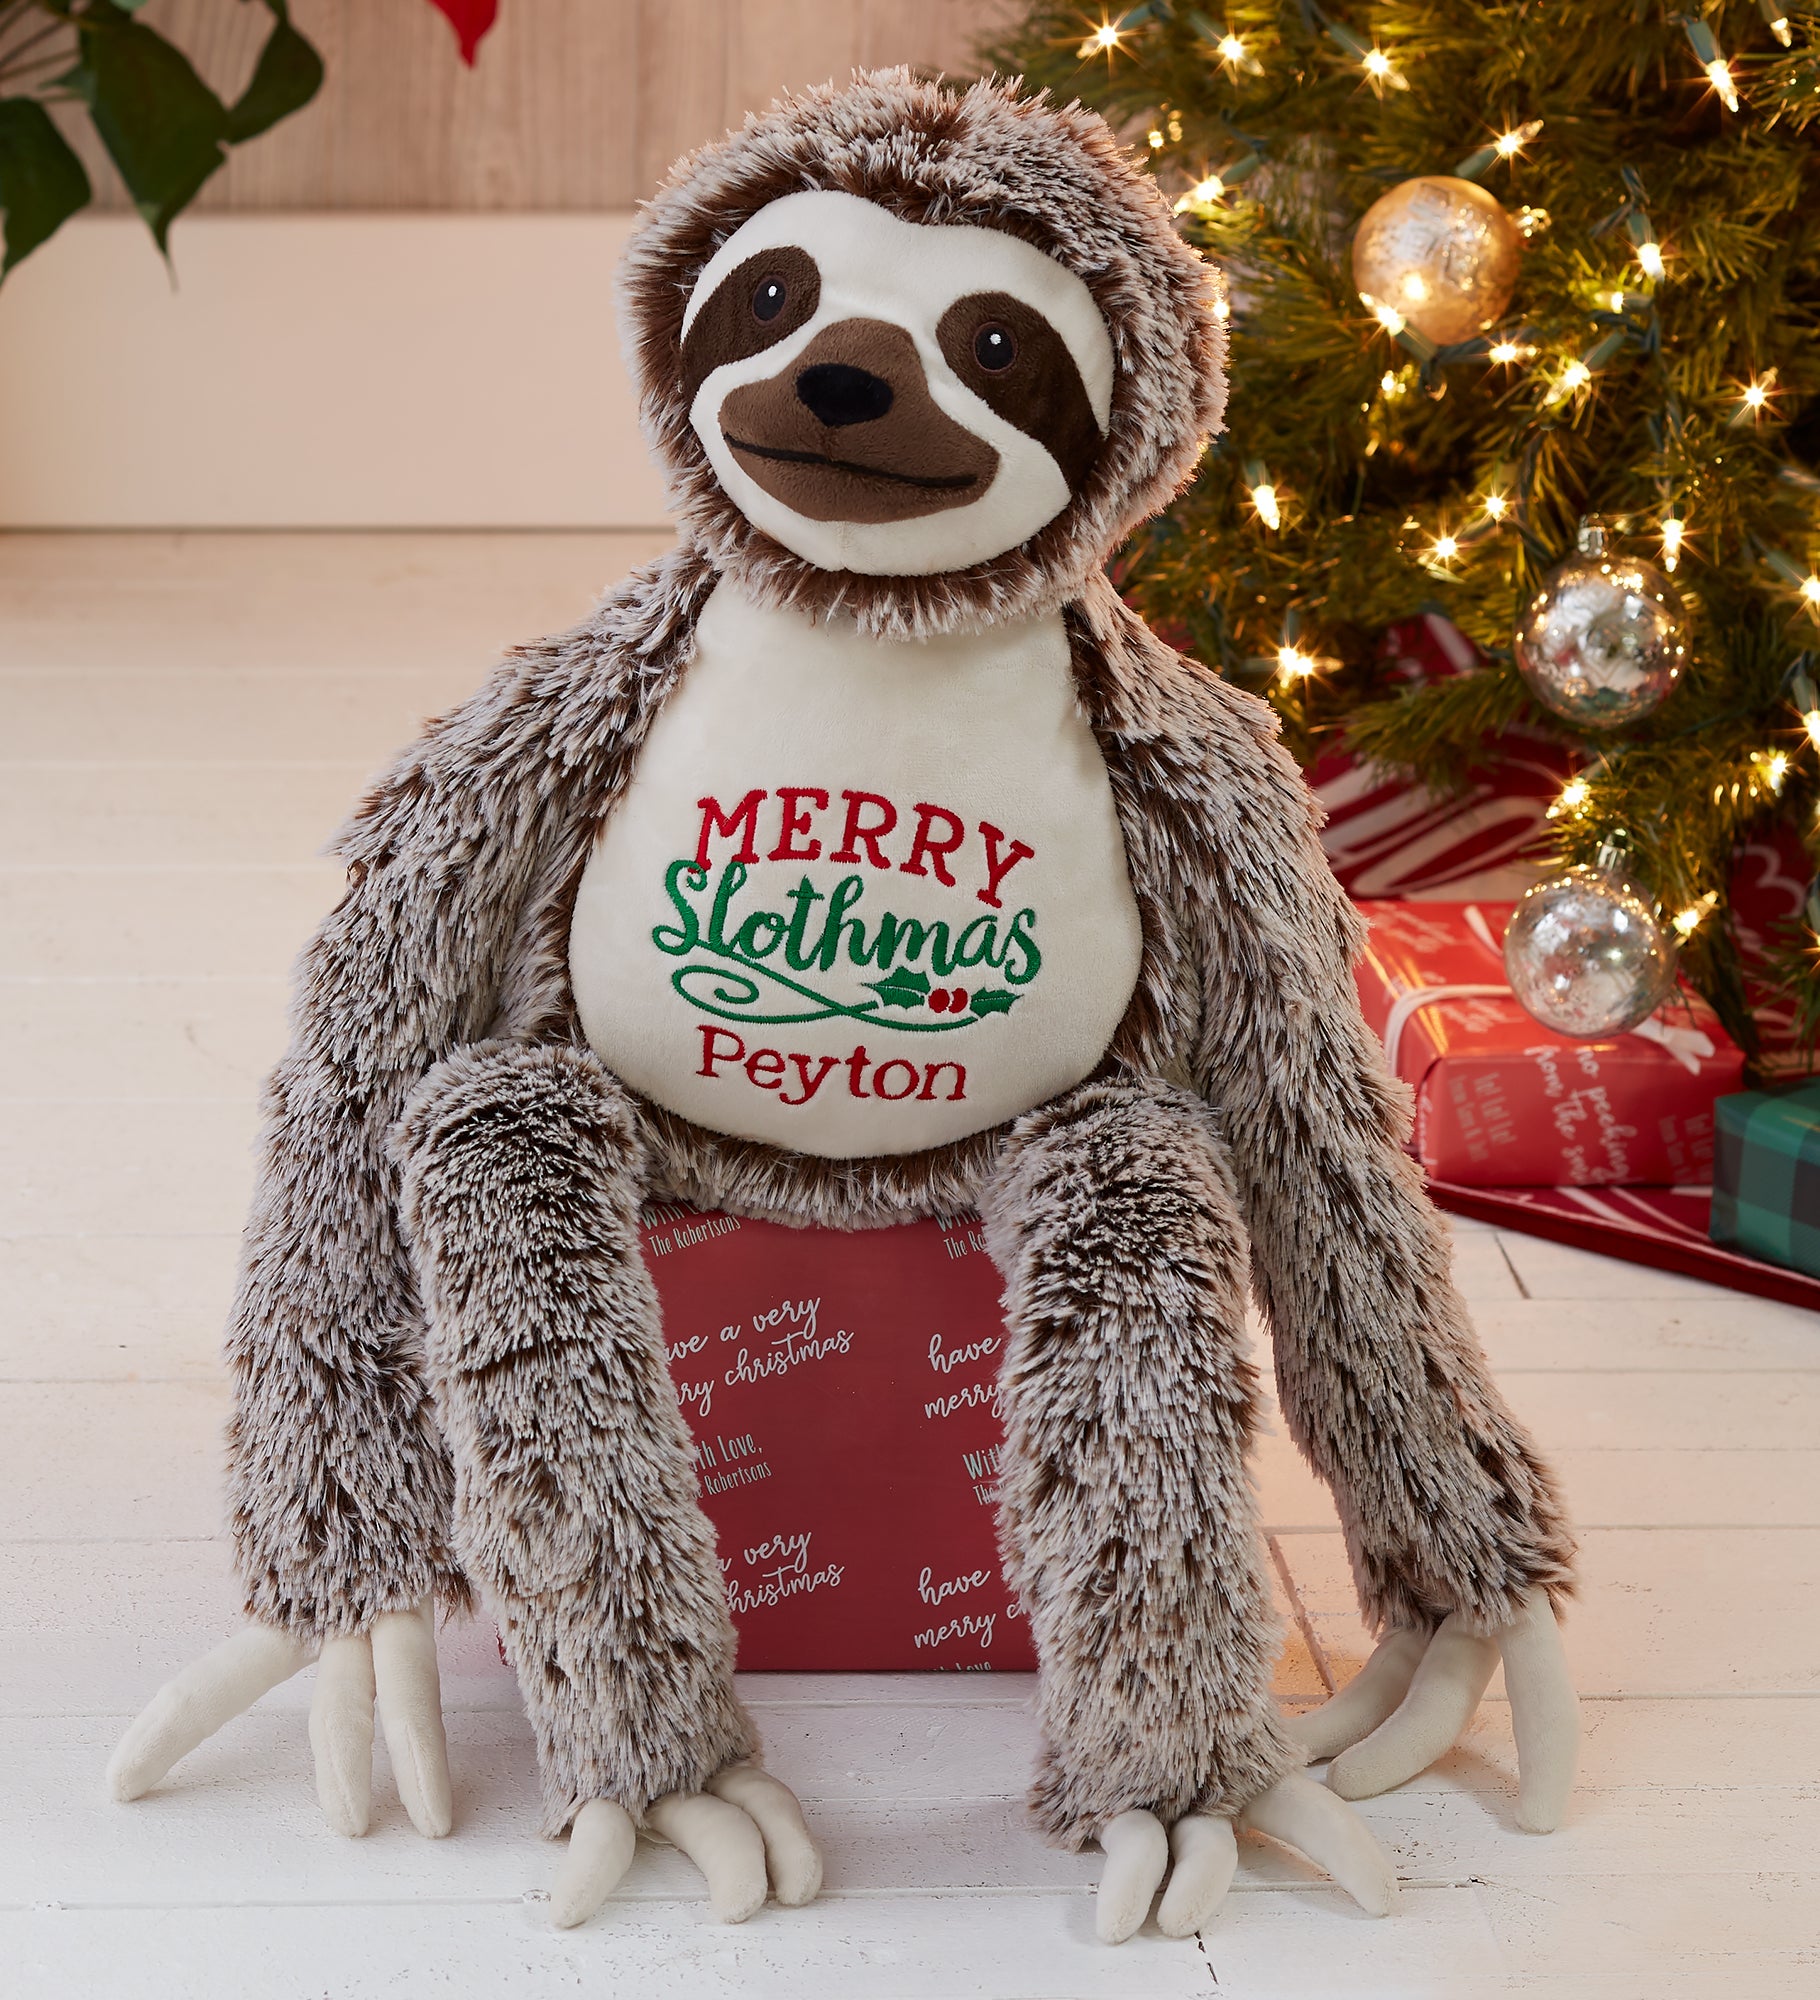 Merry Slothmas Personalized Long Legged Sloth Stuffed Animal